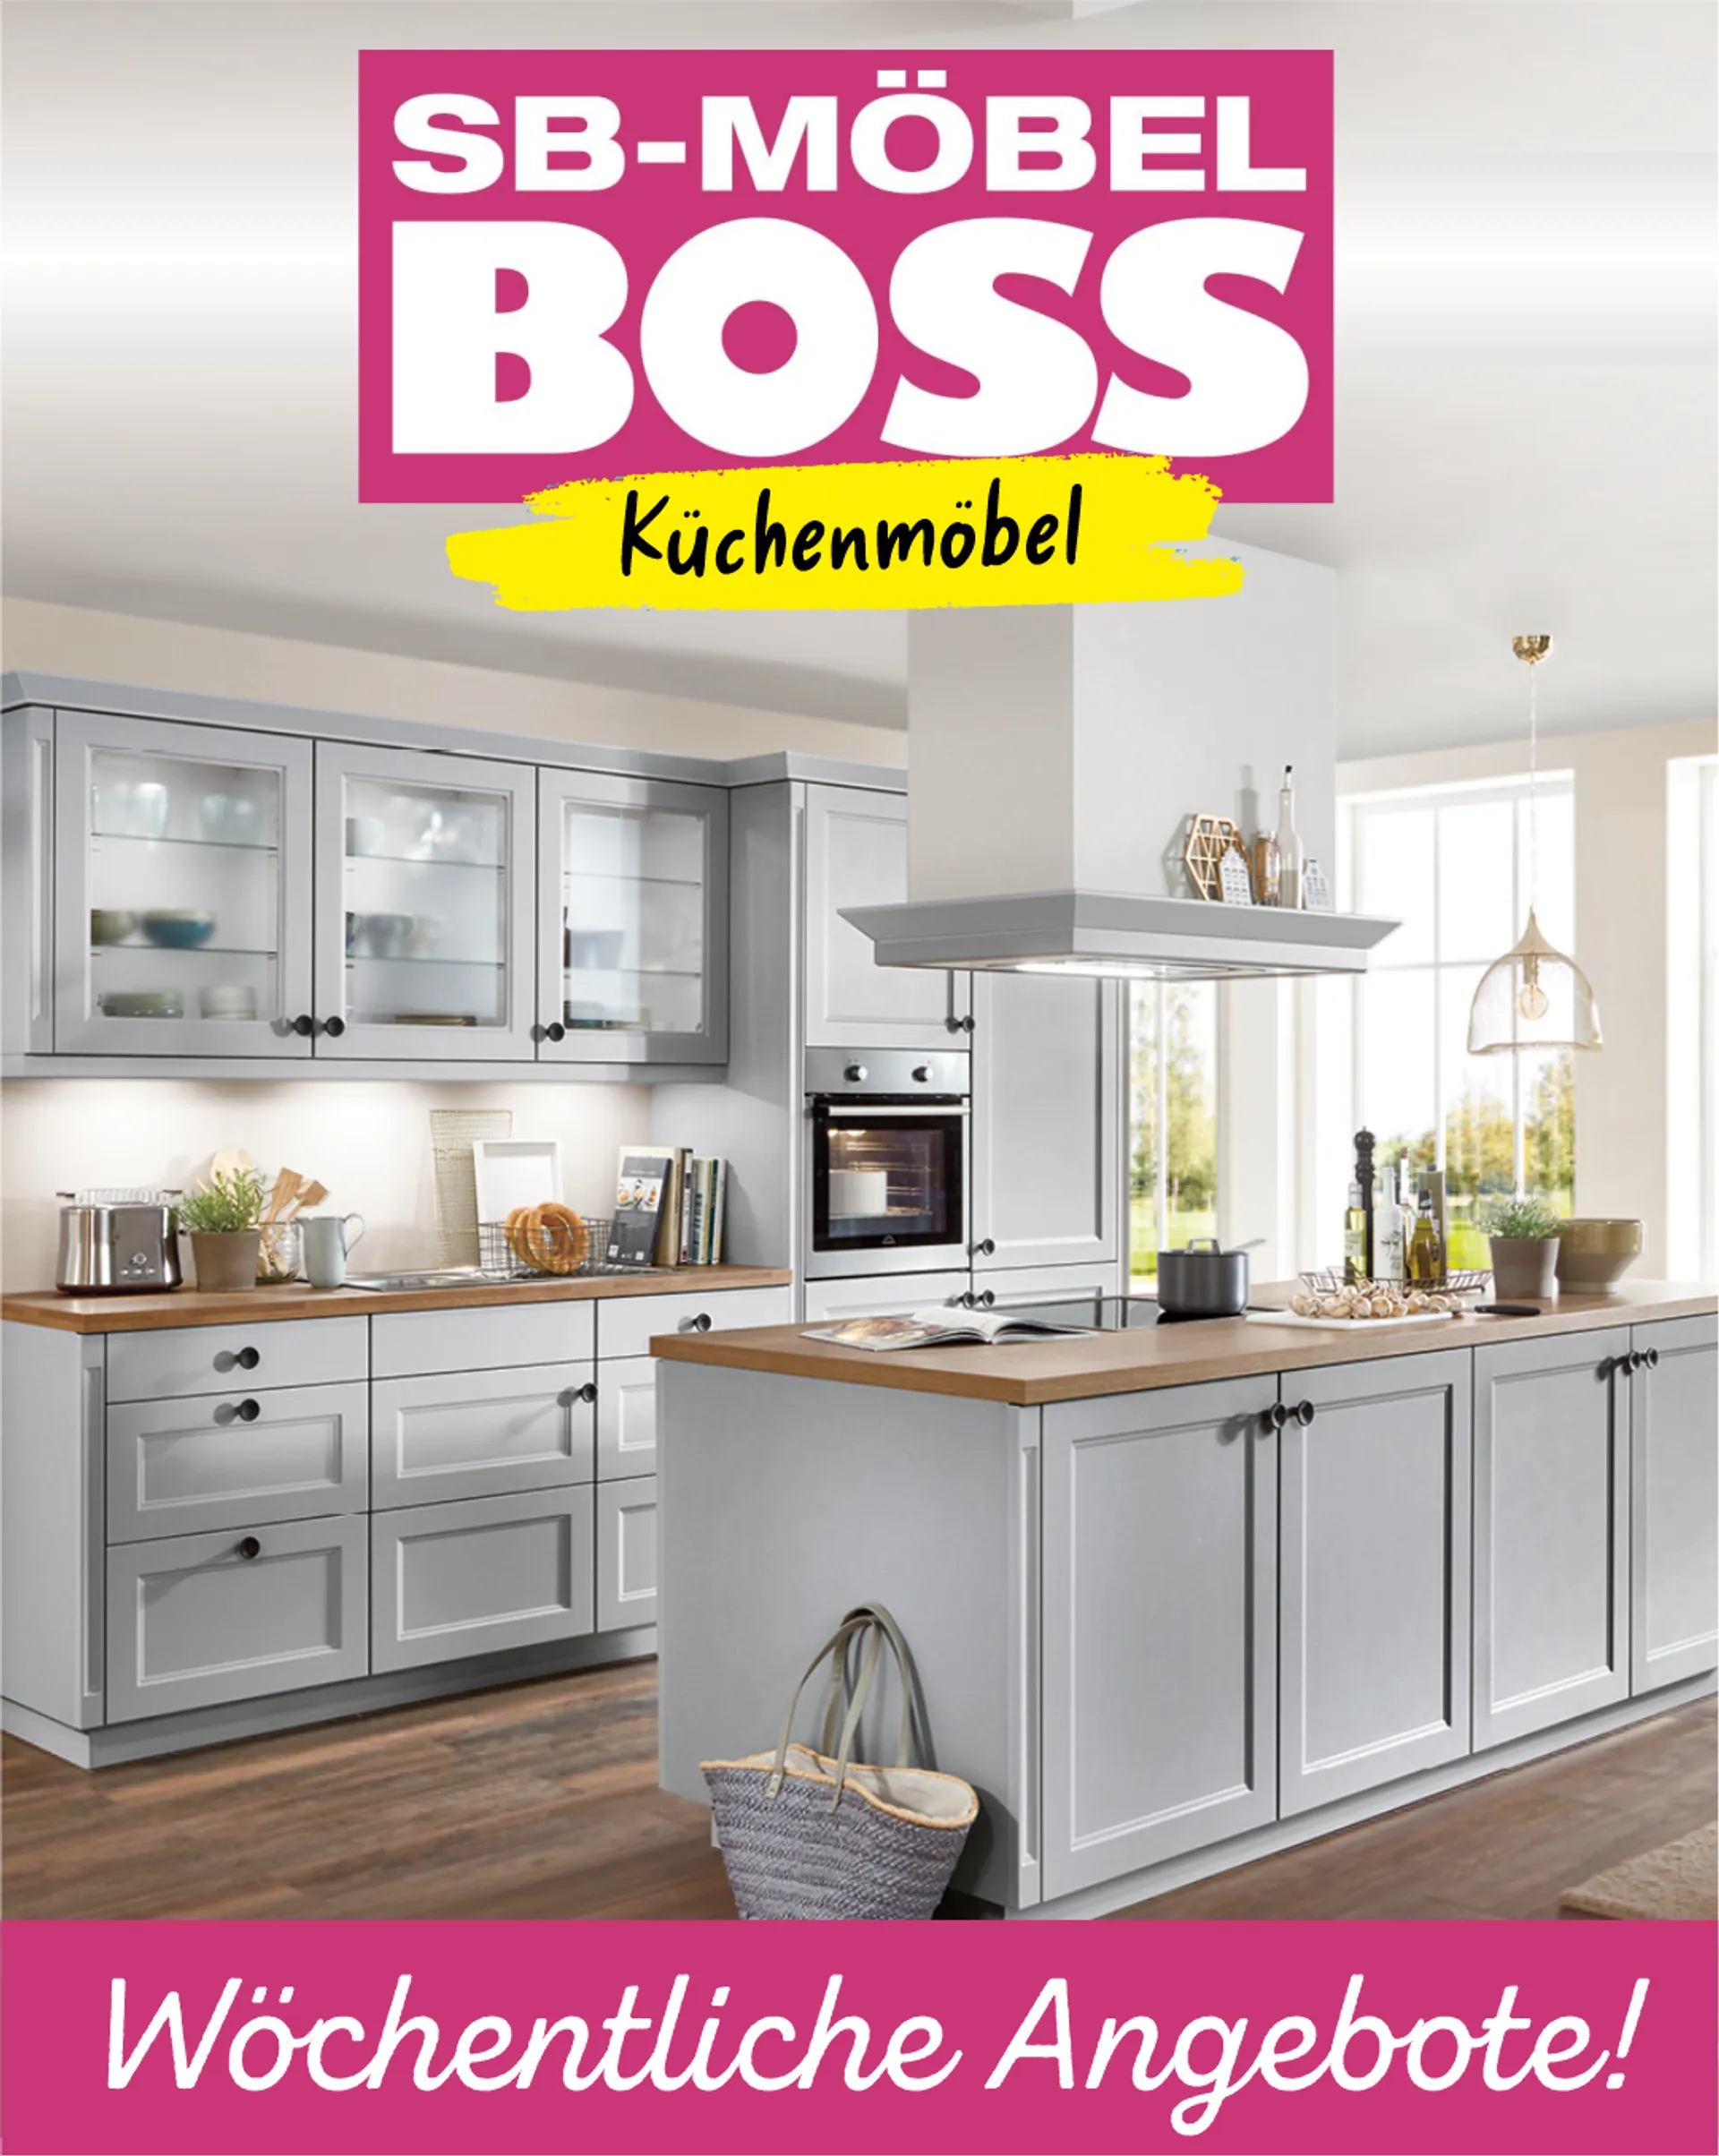 SB moebel boss - Küchenmöbel